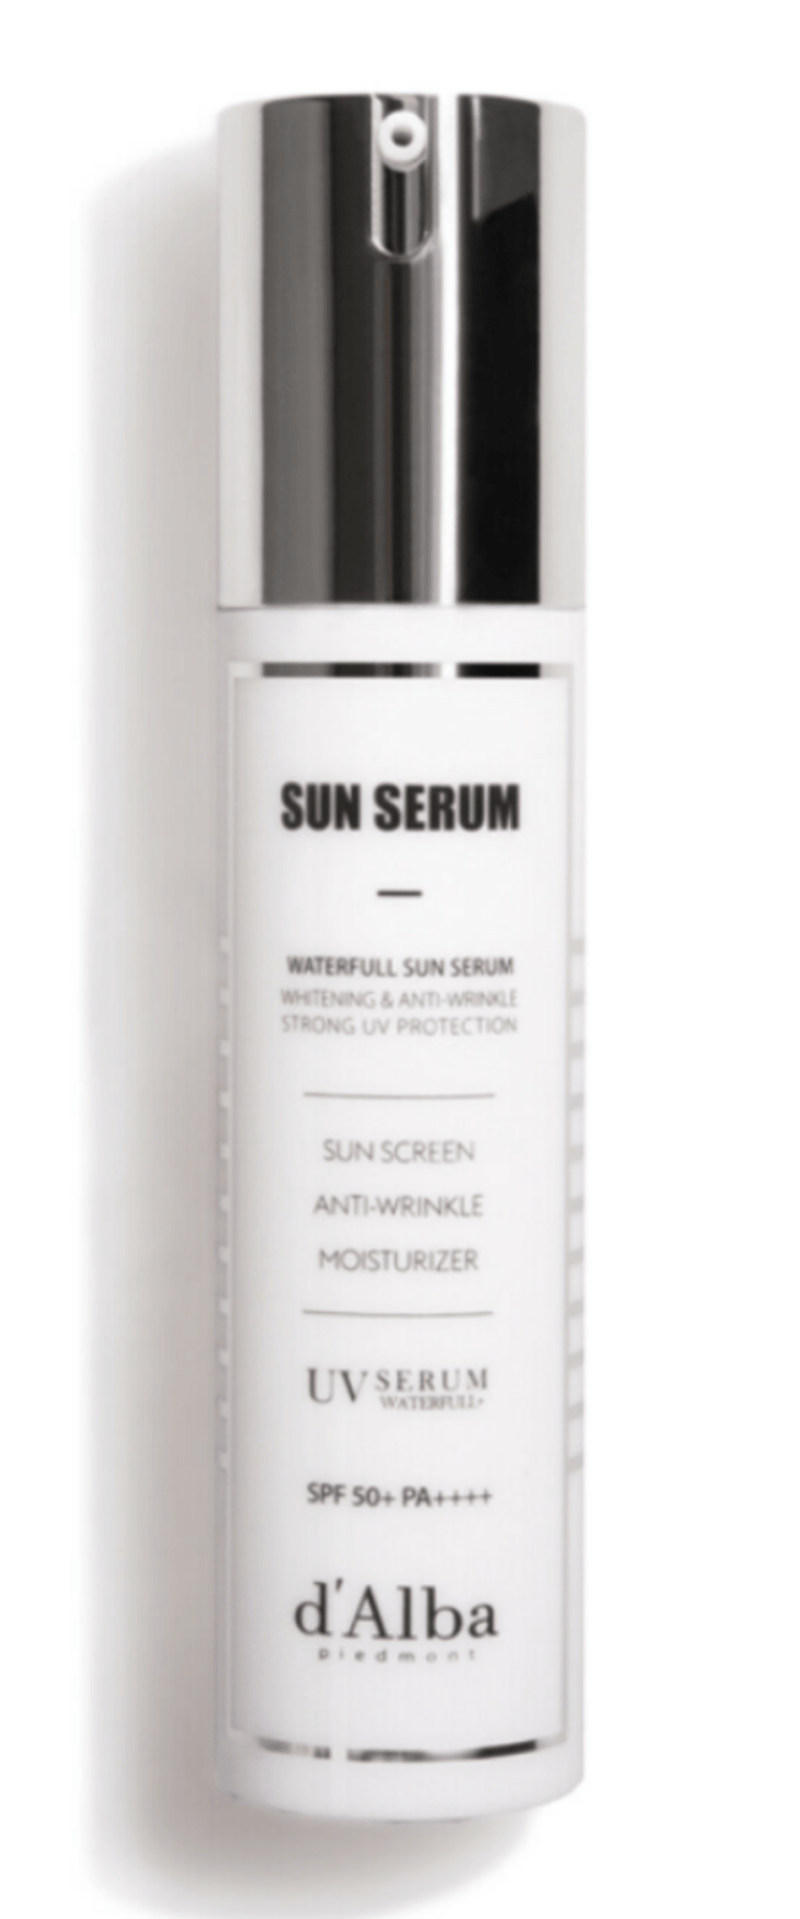 d'Alba PIEDMONT - Waterfull Sun Serum SPF50+ PA++++ 50g - Bare Face Beauty